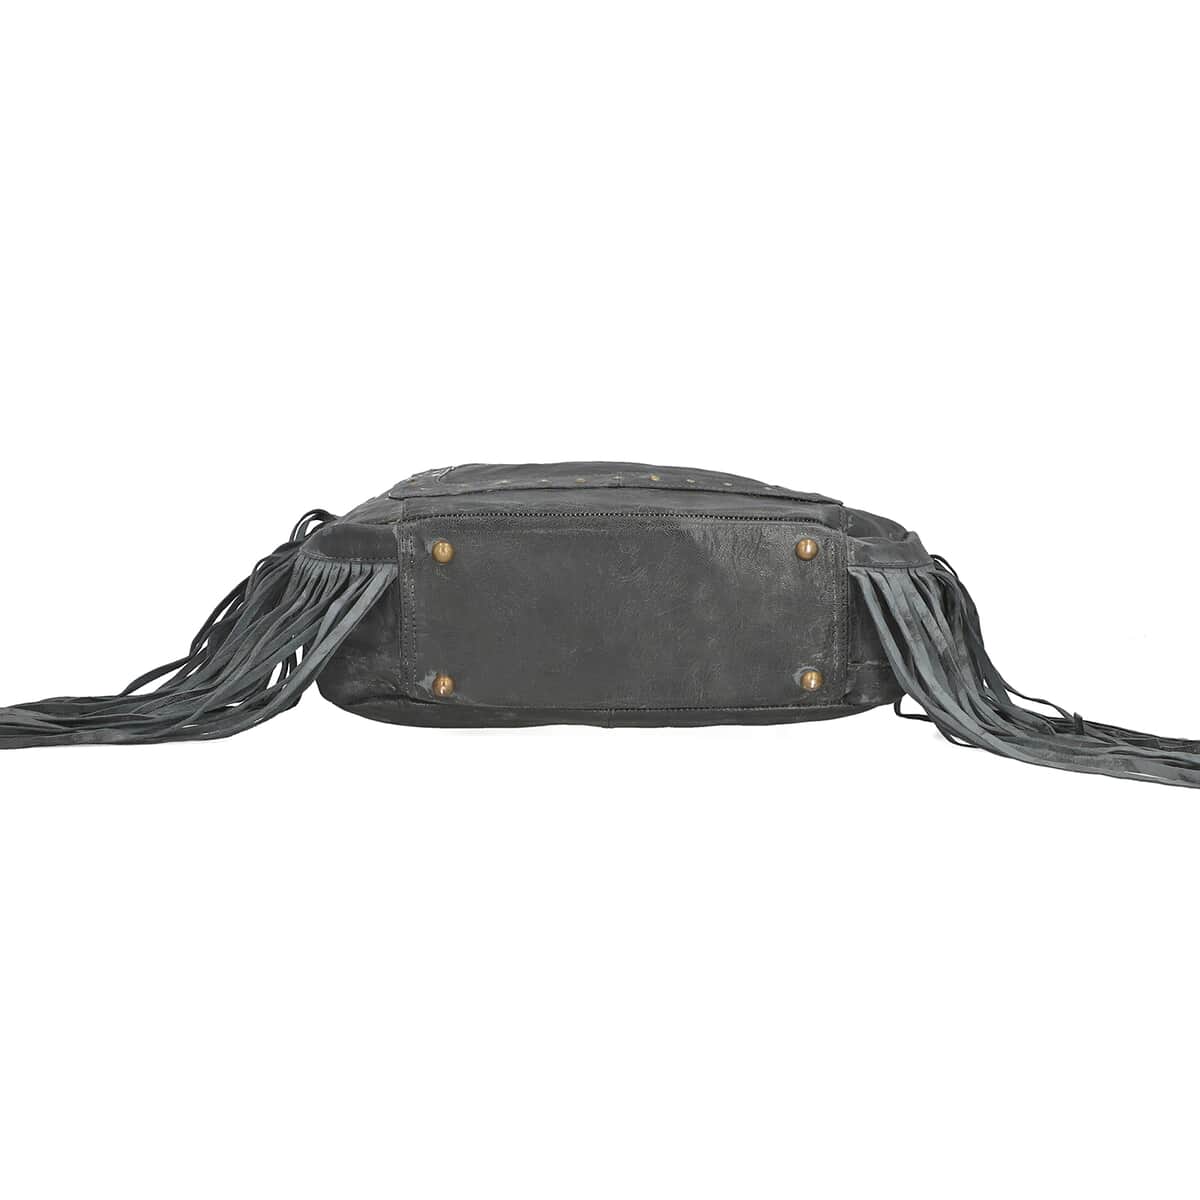 "100% Genuine Leather Shoulder Bag with Fringes SIZE: 13(L)x4(W)x11.5(H) inches COLOR: Black" image number 4